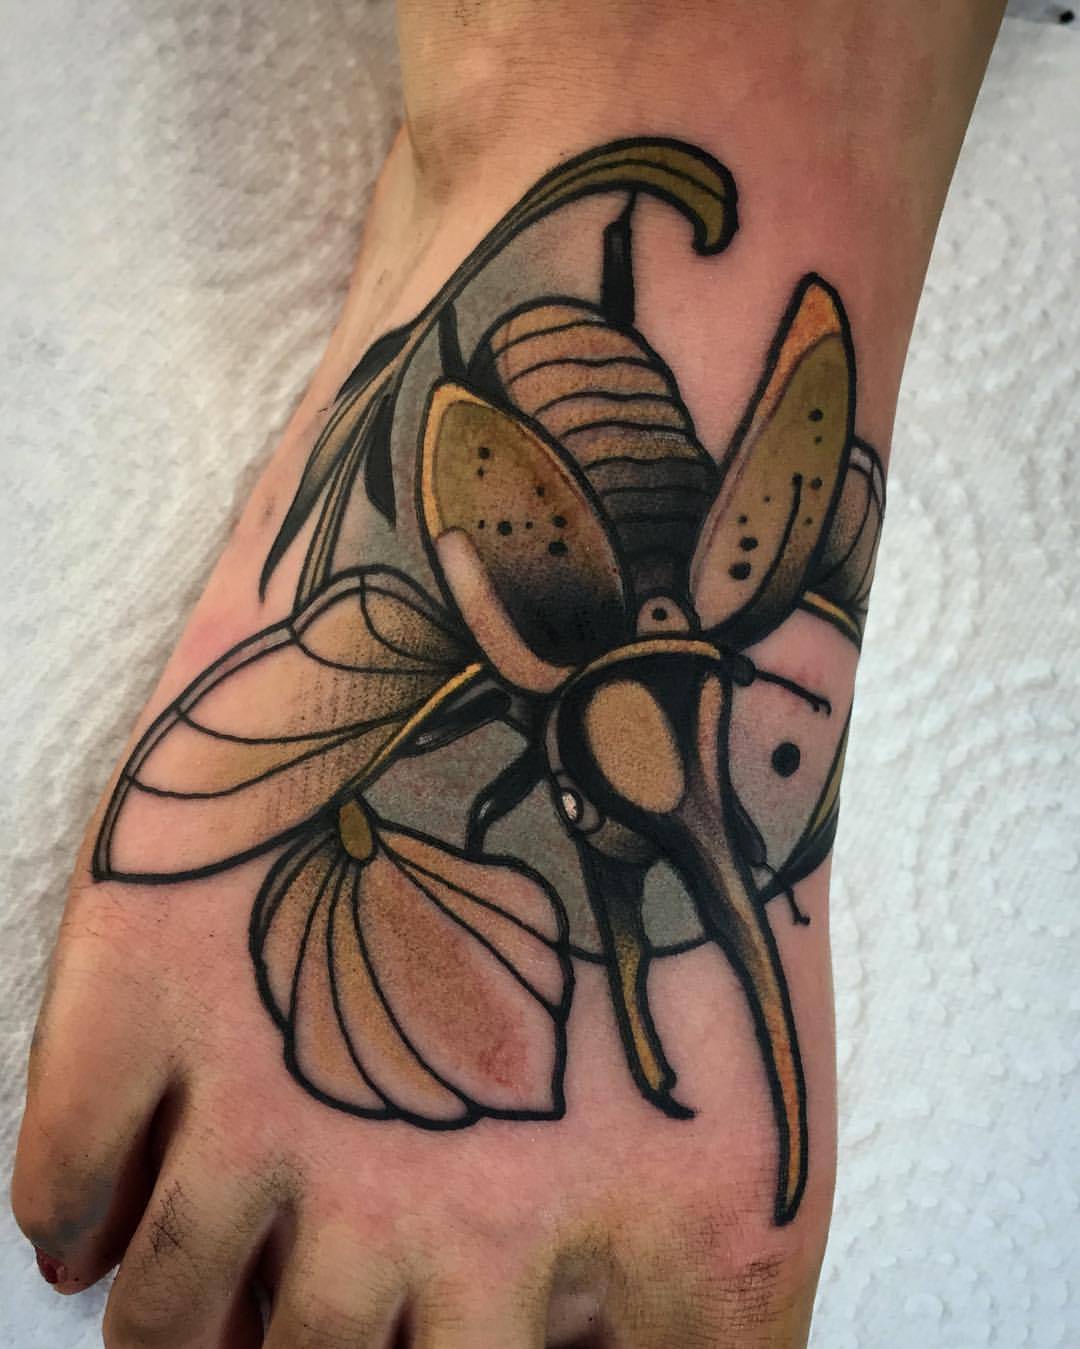 Atlas Beetle Tattoo by Medusa Lou